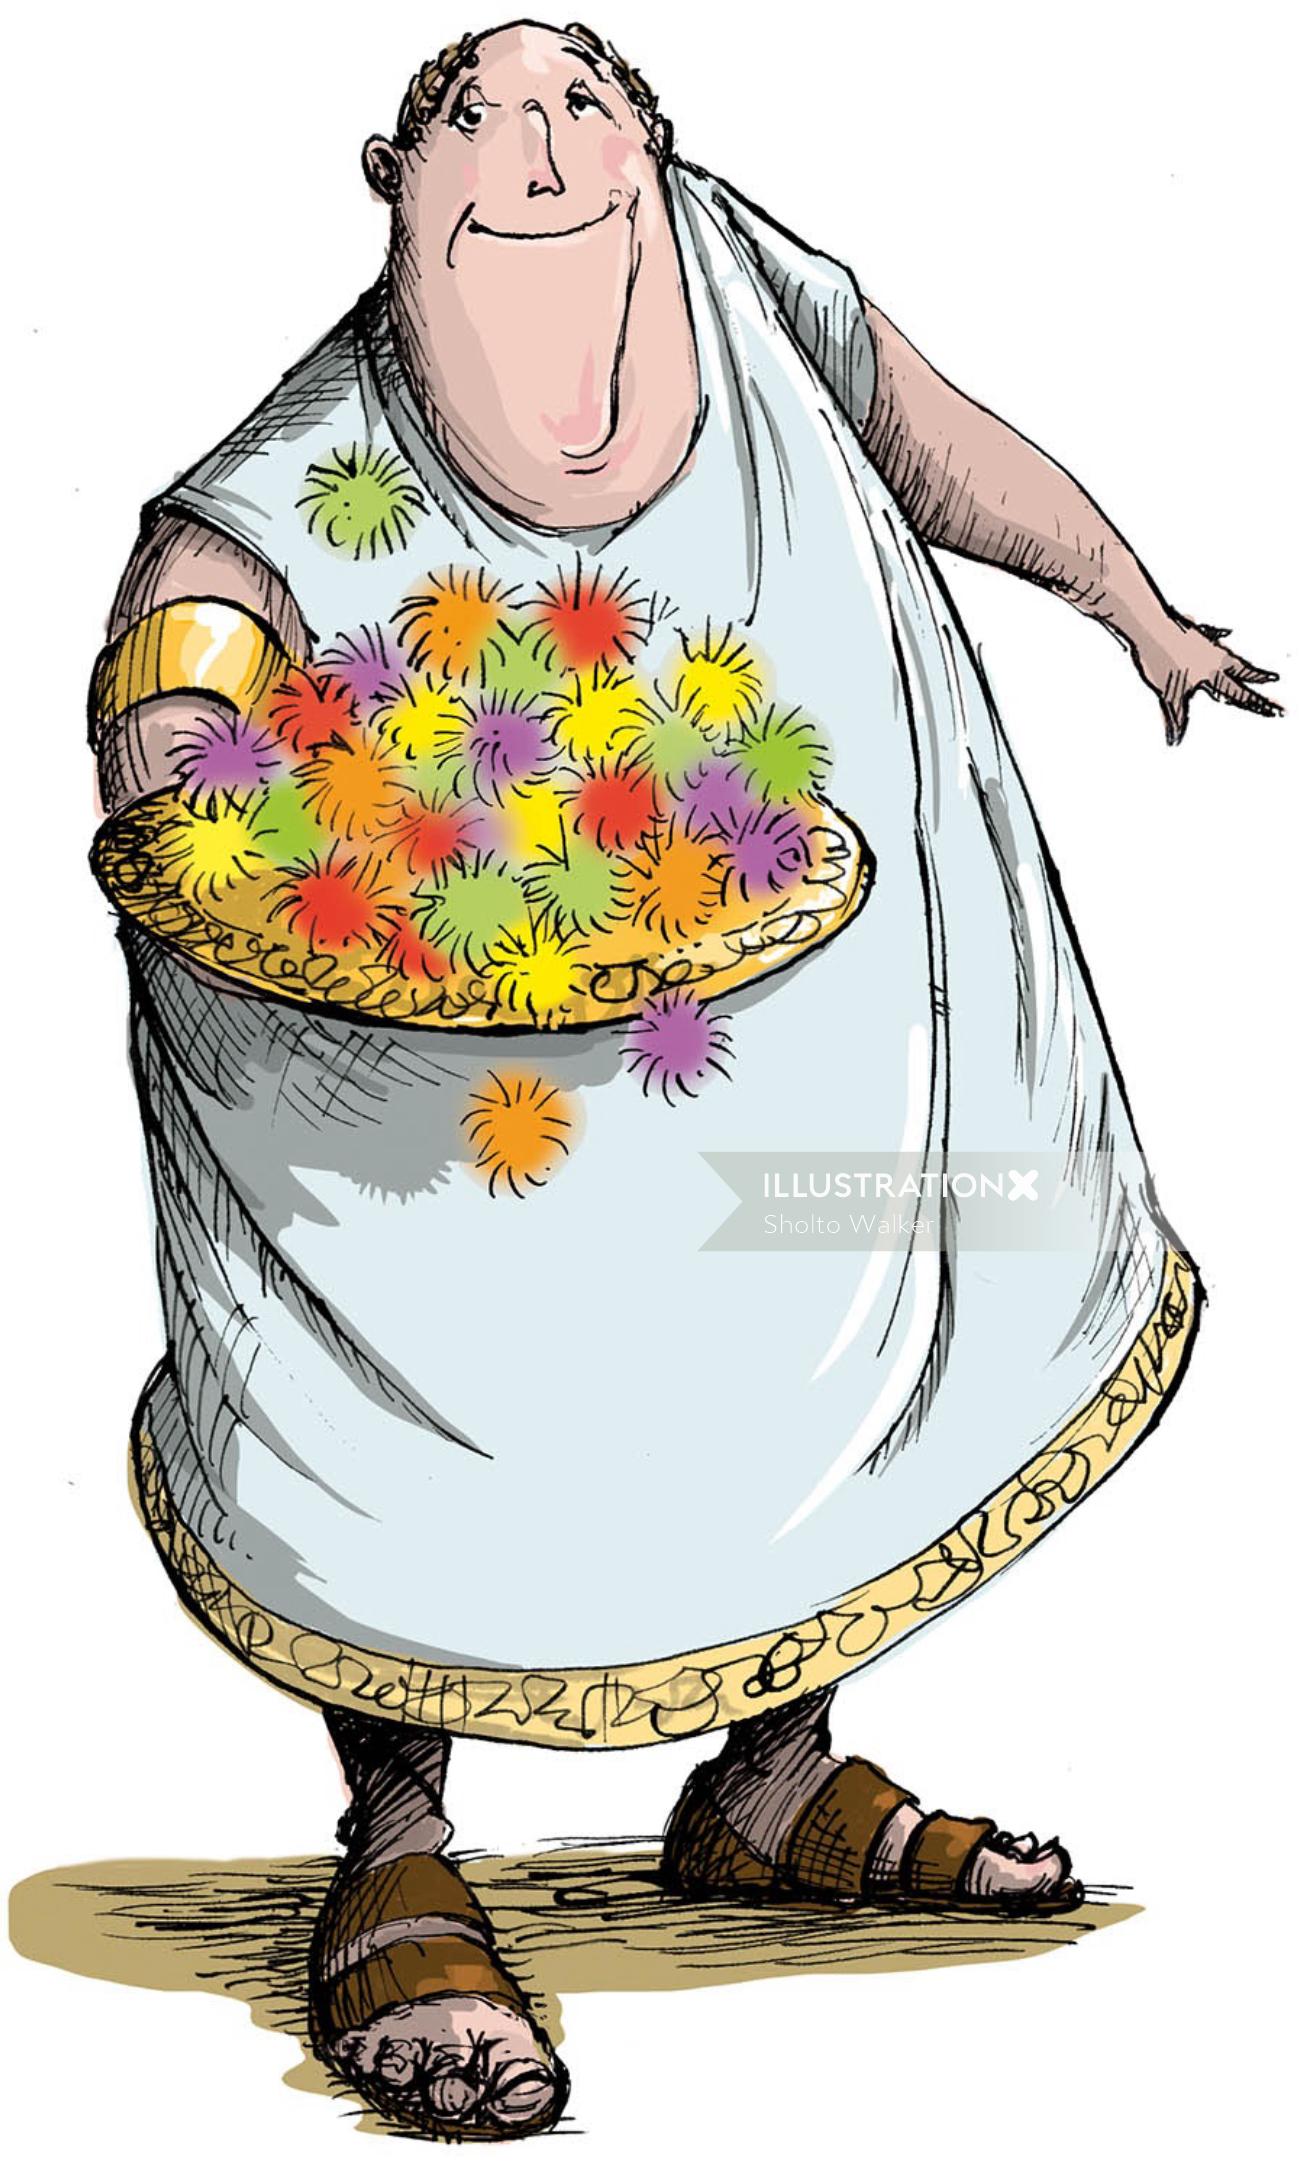 Homem romano gordo de desenho animado e humor